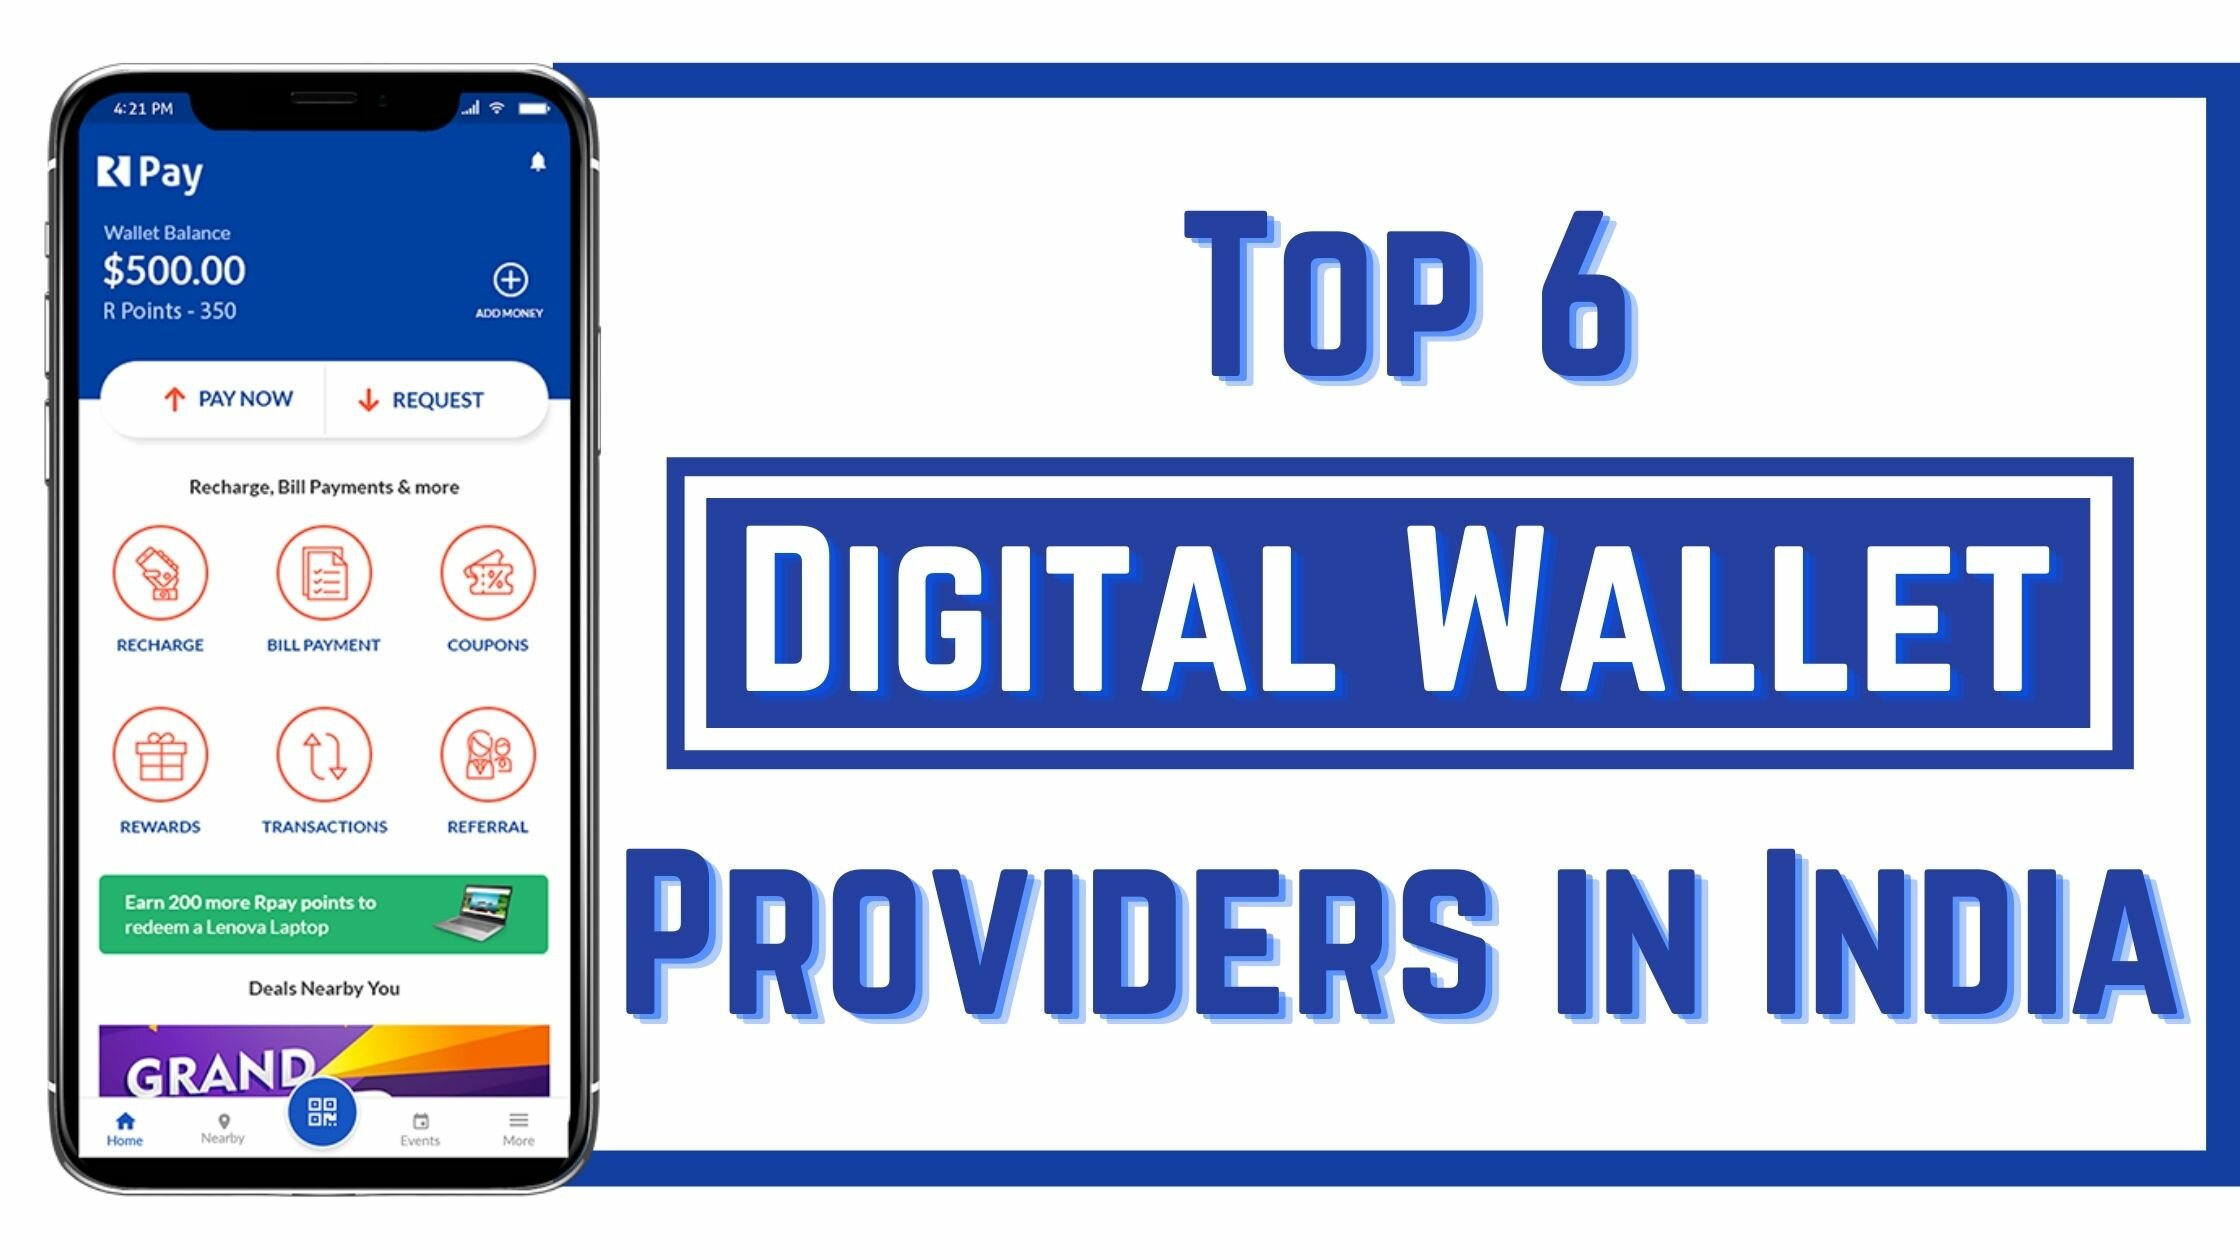 Top 6 Digital wallet providers in India